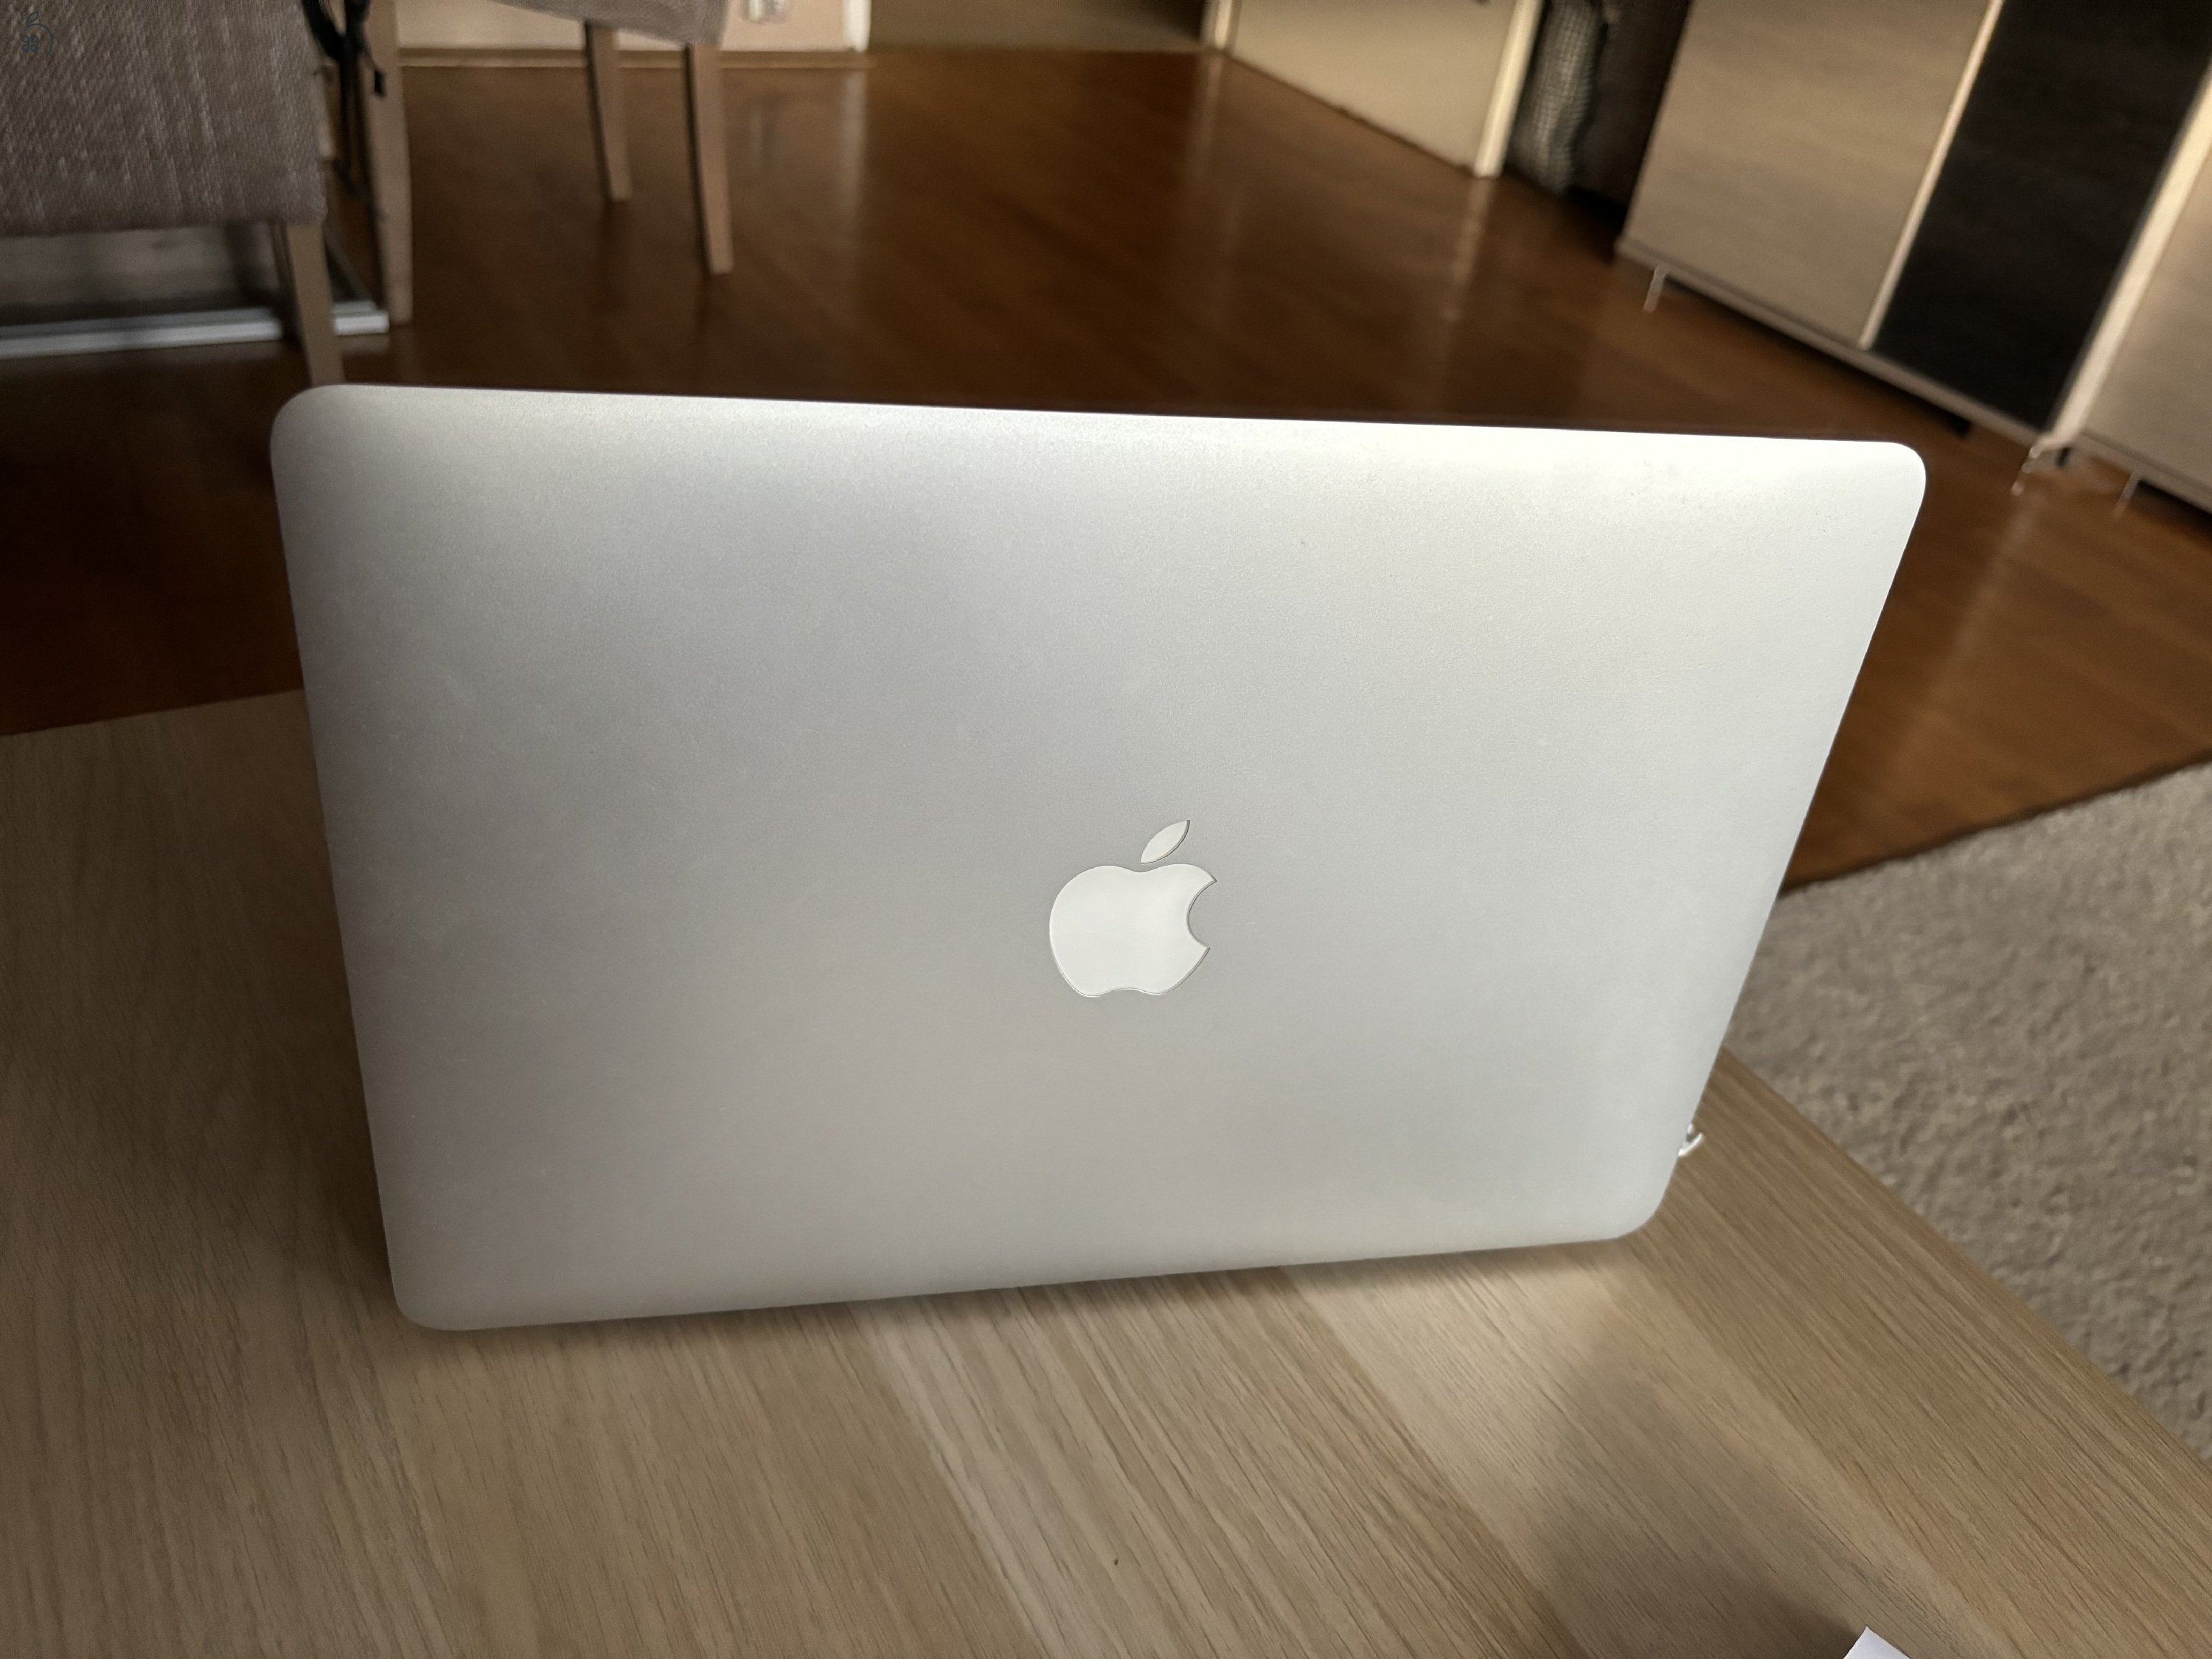 MacBook Air 2017 - angol billentyűs, töltővel